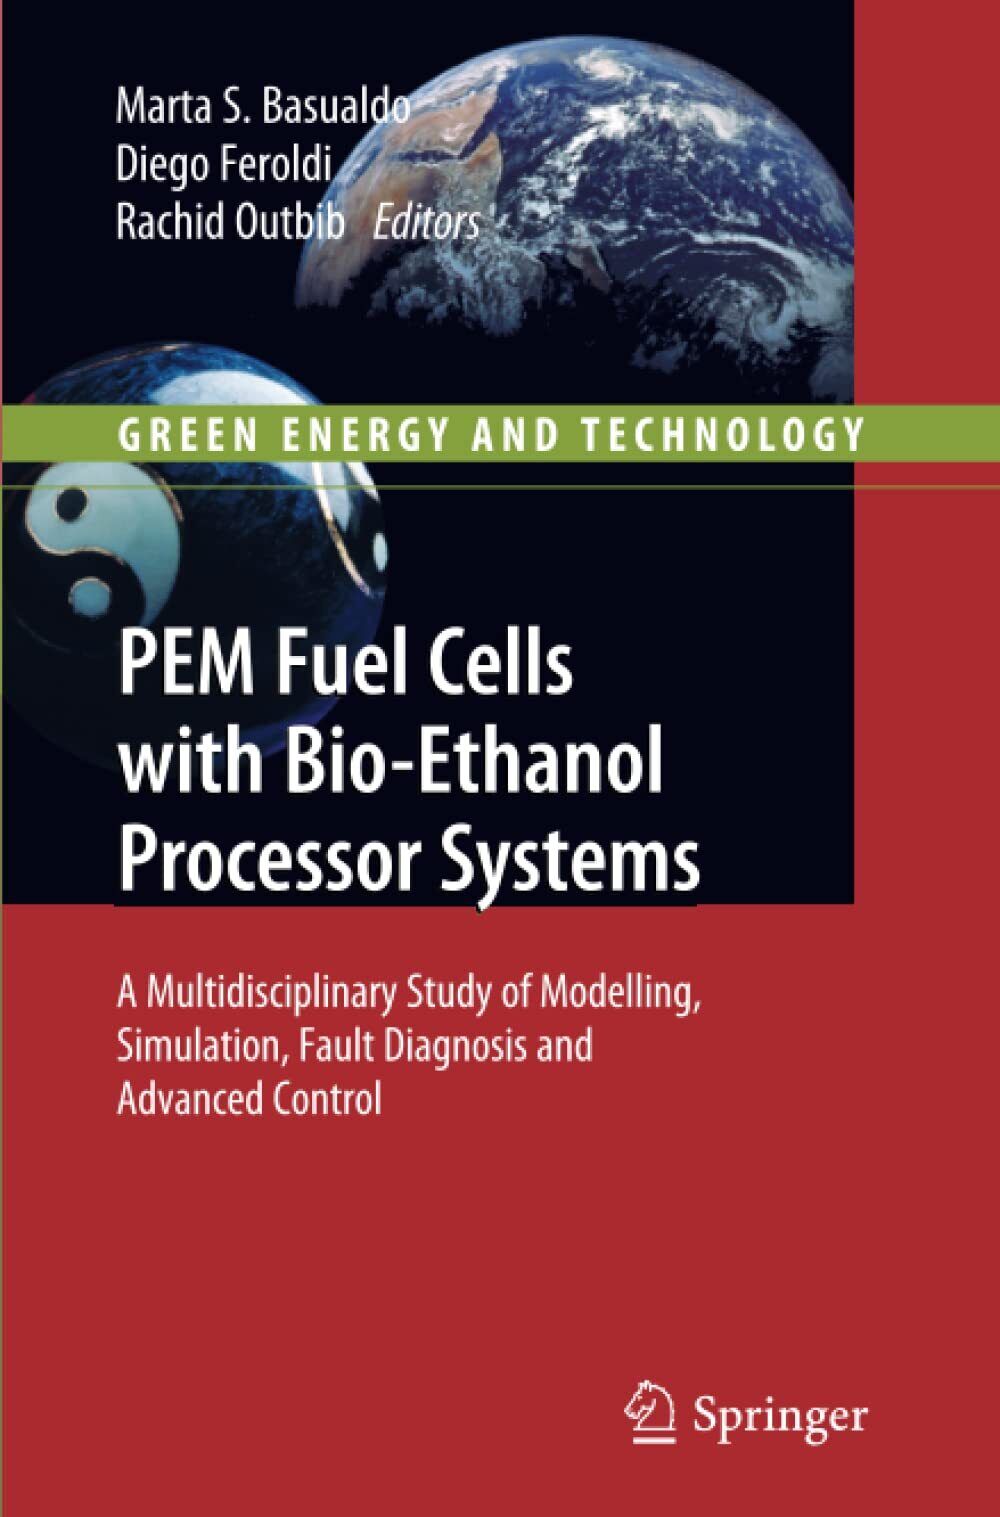 PEM Fuel Cells with Bio-Ethanol Processor Systems - Marta S. Basualdo - 2013